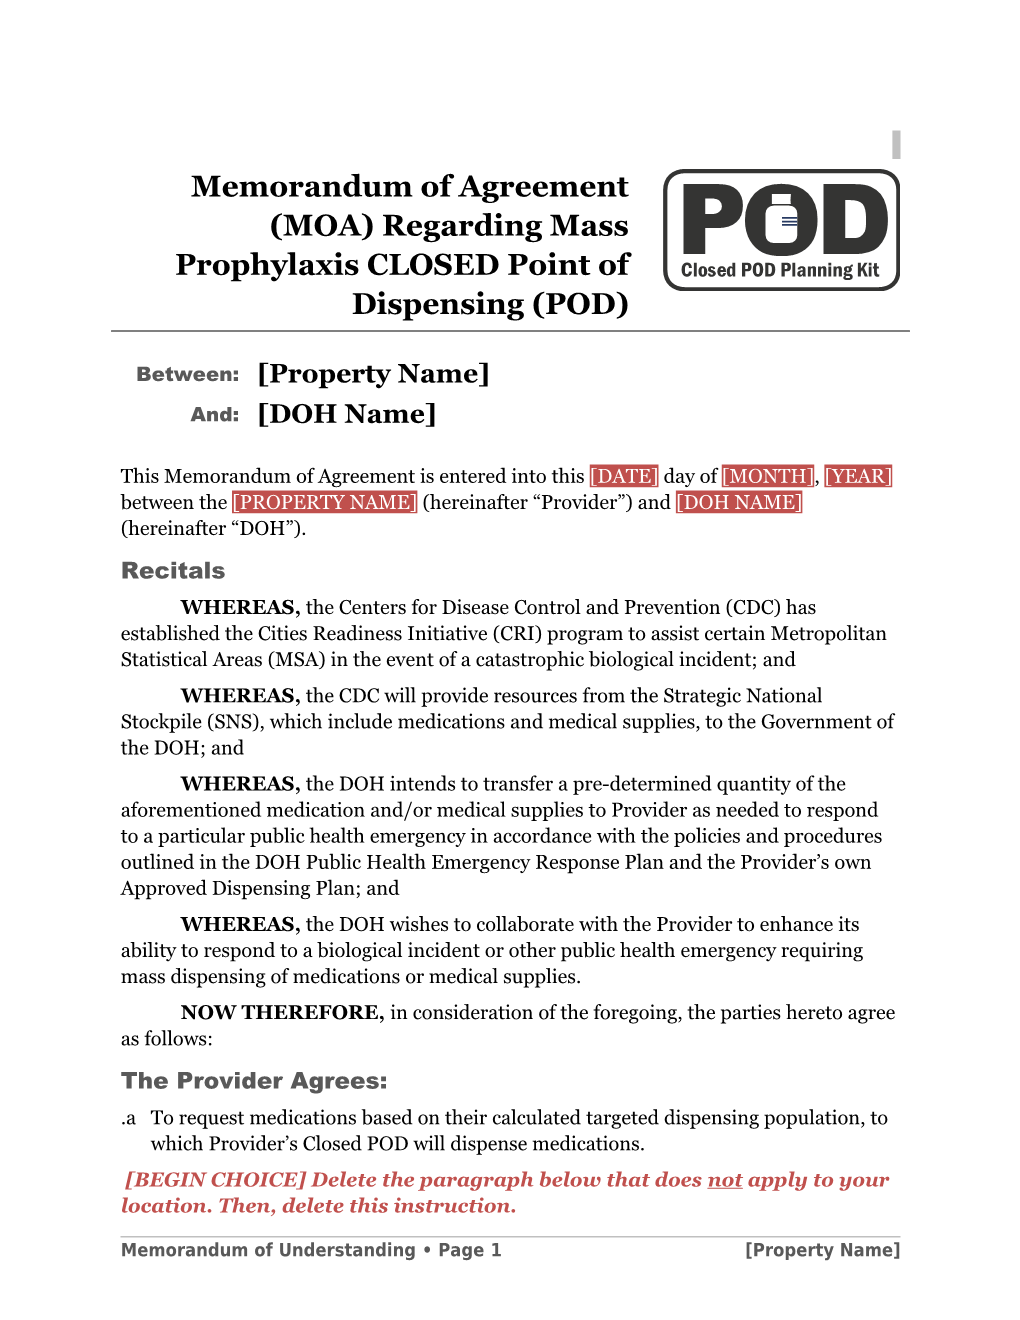 Memorandum of Agreement (MOA) Regarding Mass Prophylaxis CLOSED Point of Dispensing (POD)